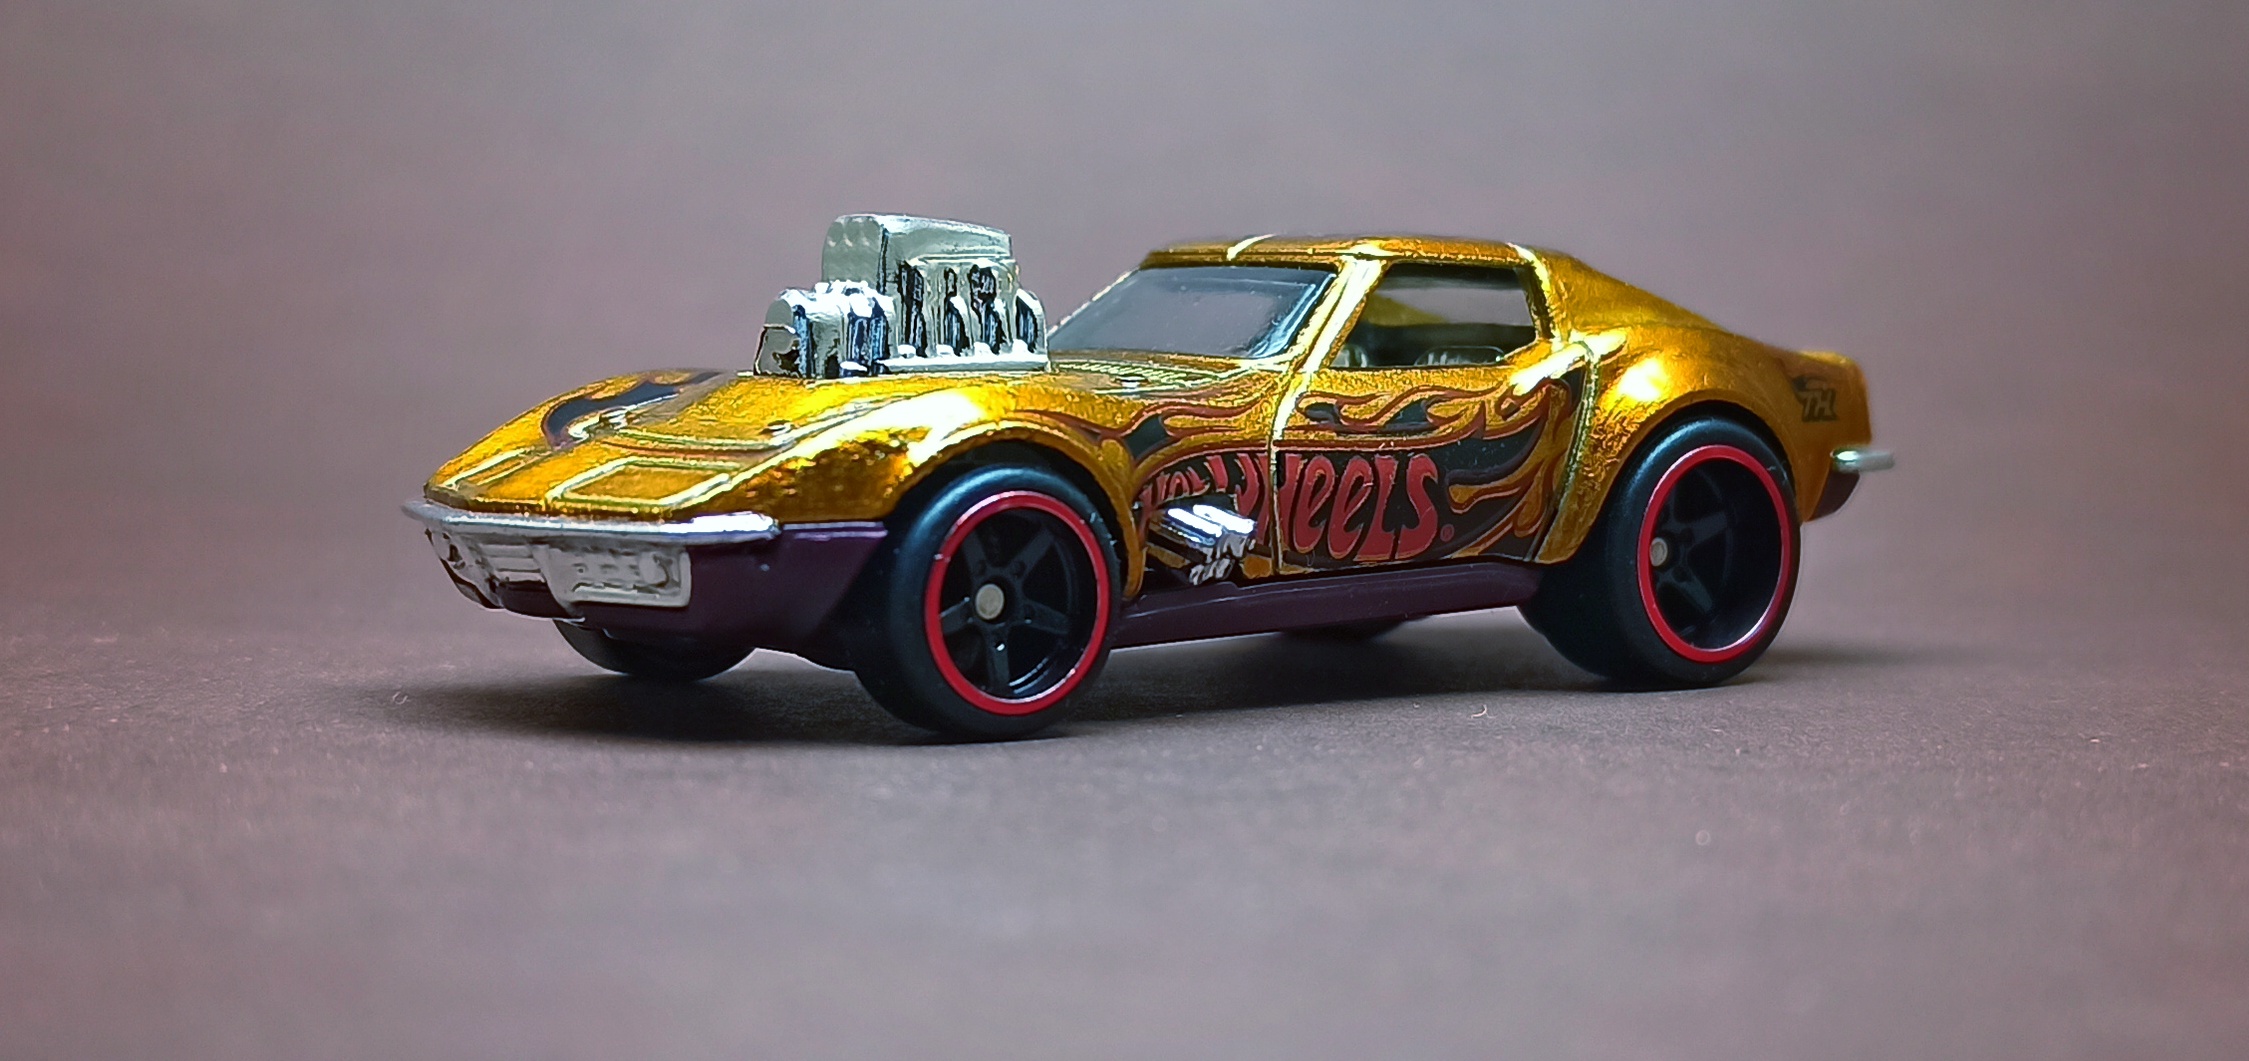 Hot Wheels '68 Corvette - Gas Monkey Garage (HKL10) 2023 (139/250) HW Dream Garage (5/5) spectraflame gold Super Treasure Hunt (STH)